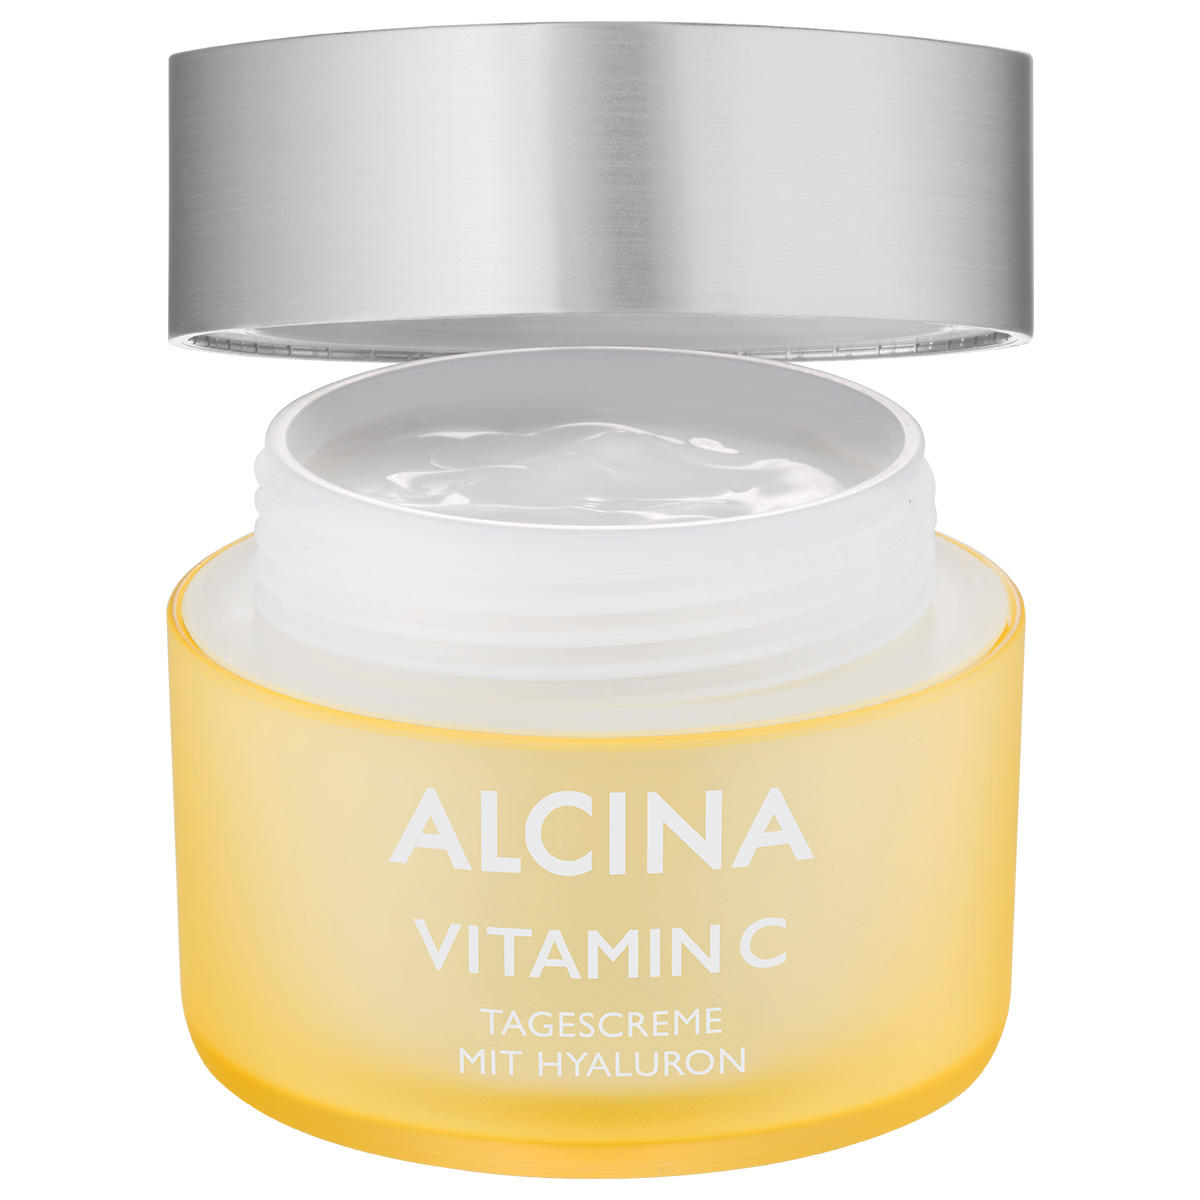 Alcina Vitamin C Tagescreme 50 ml - 3